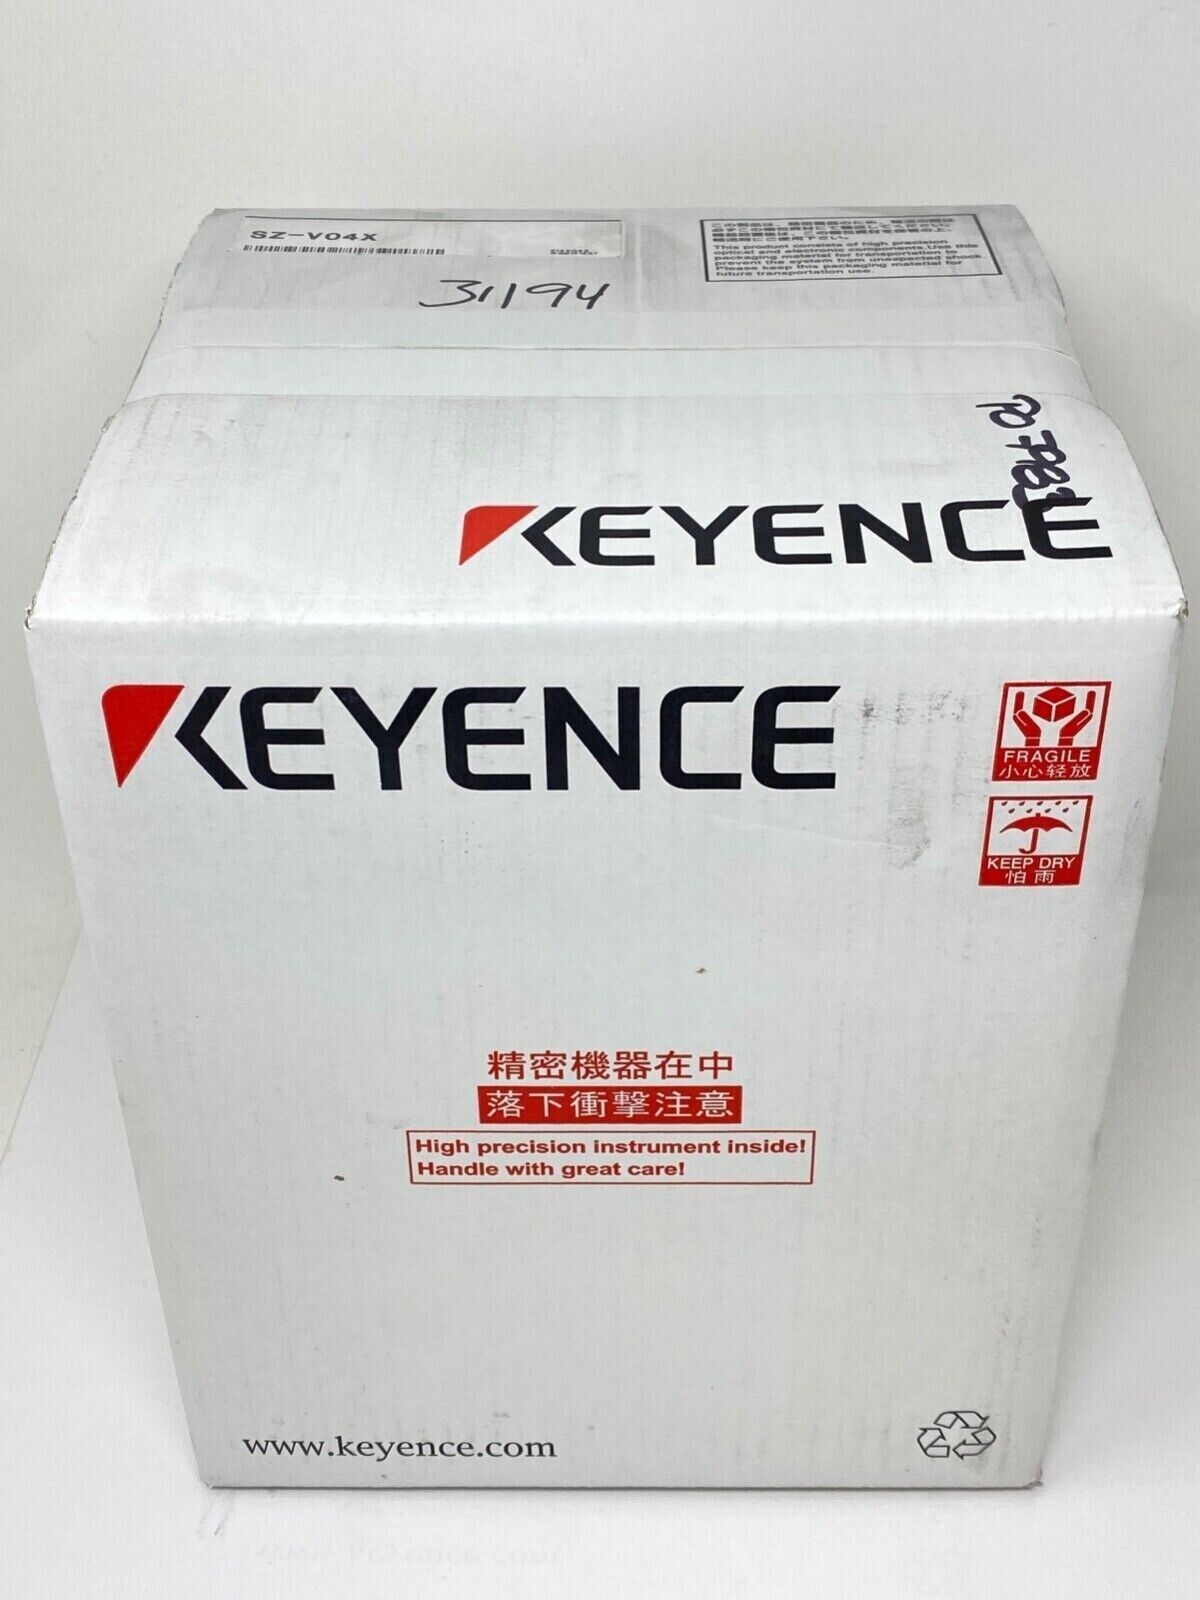 New Factory Sealed KEYENCE SZ-V04X Safety Laser Scanner